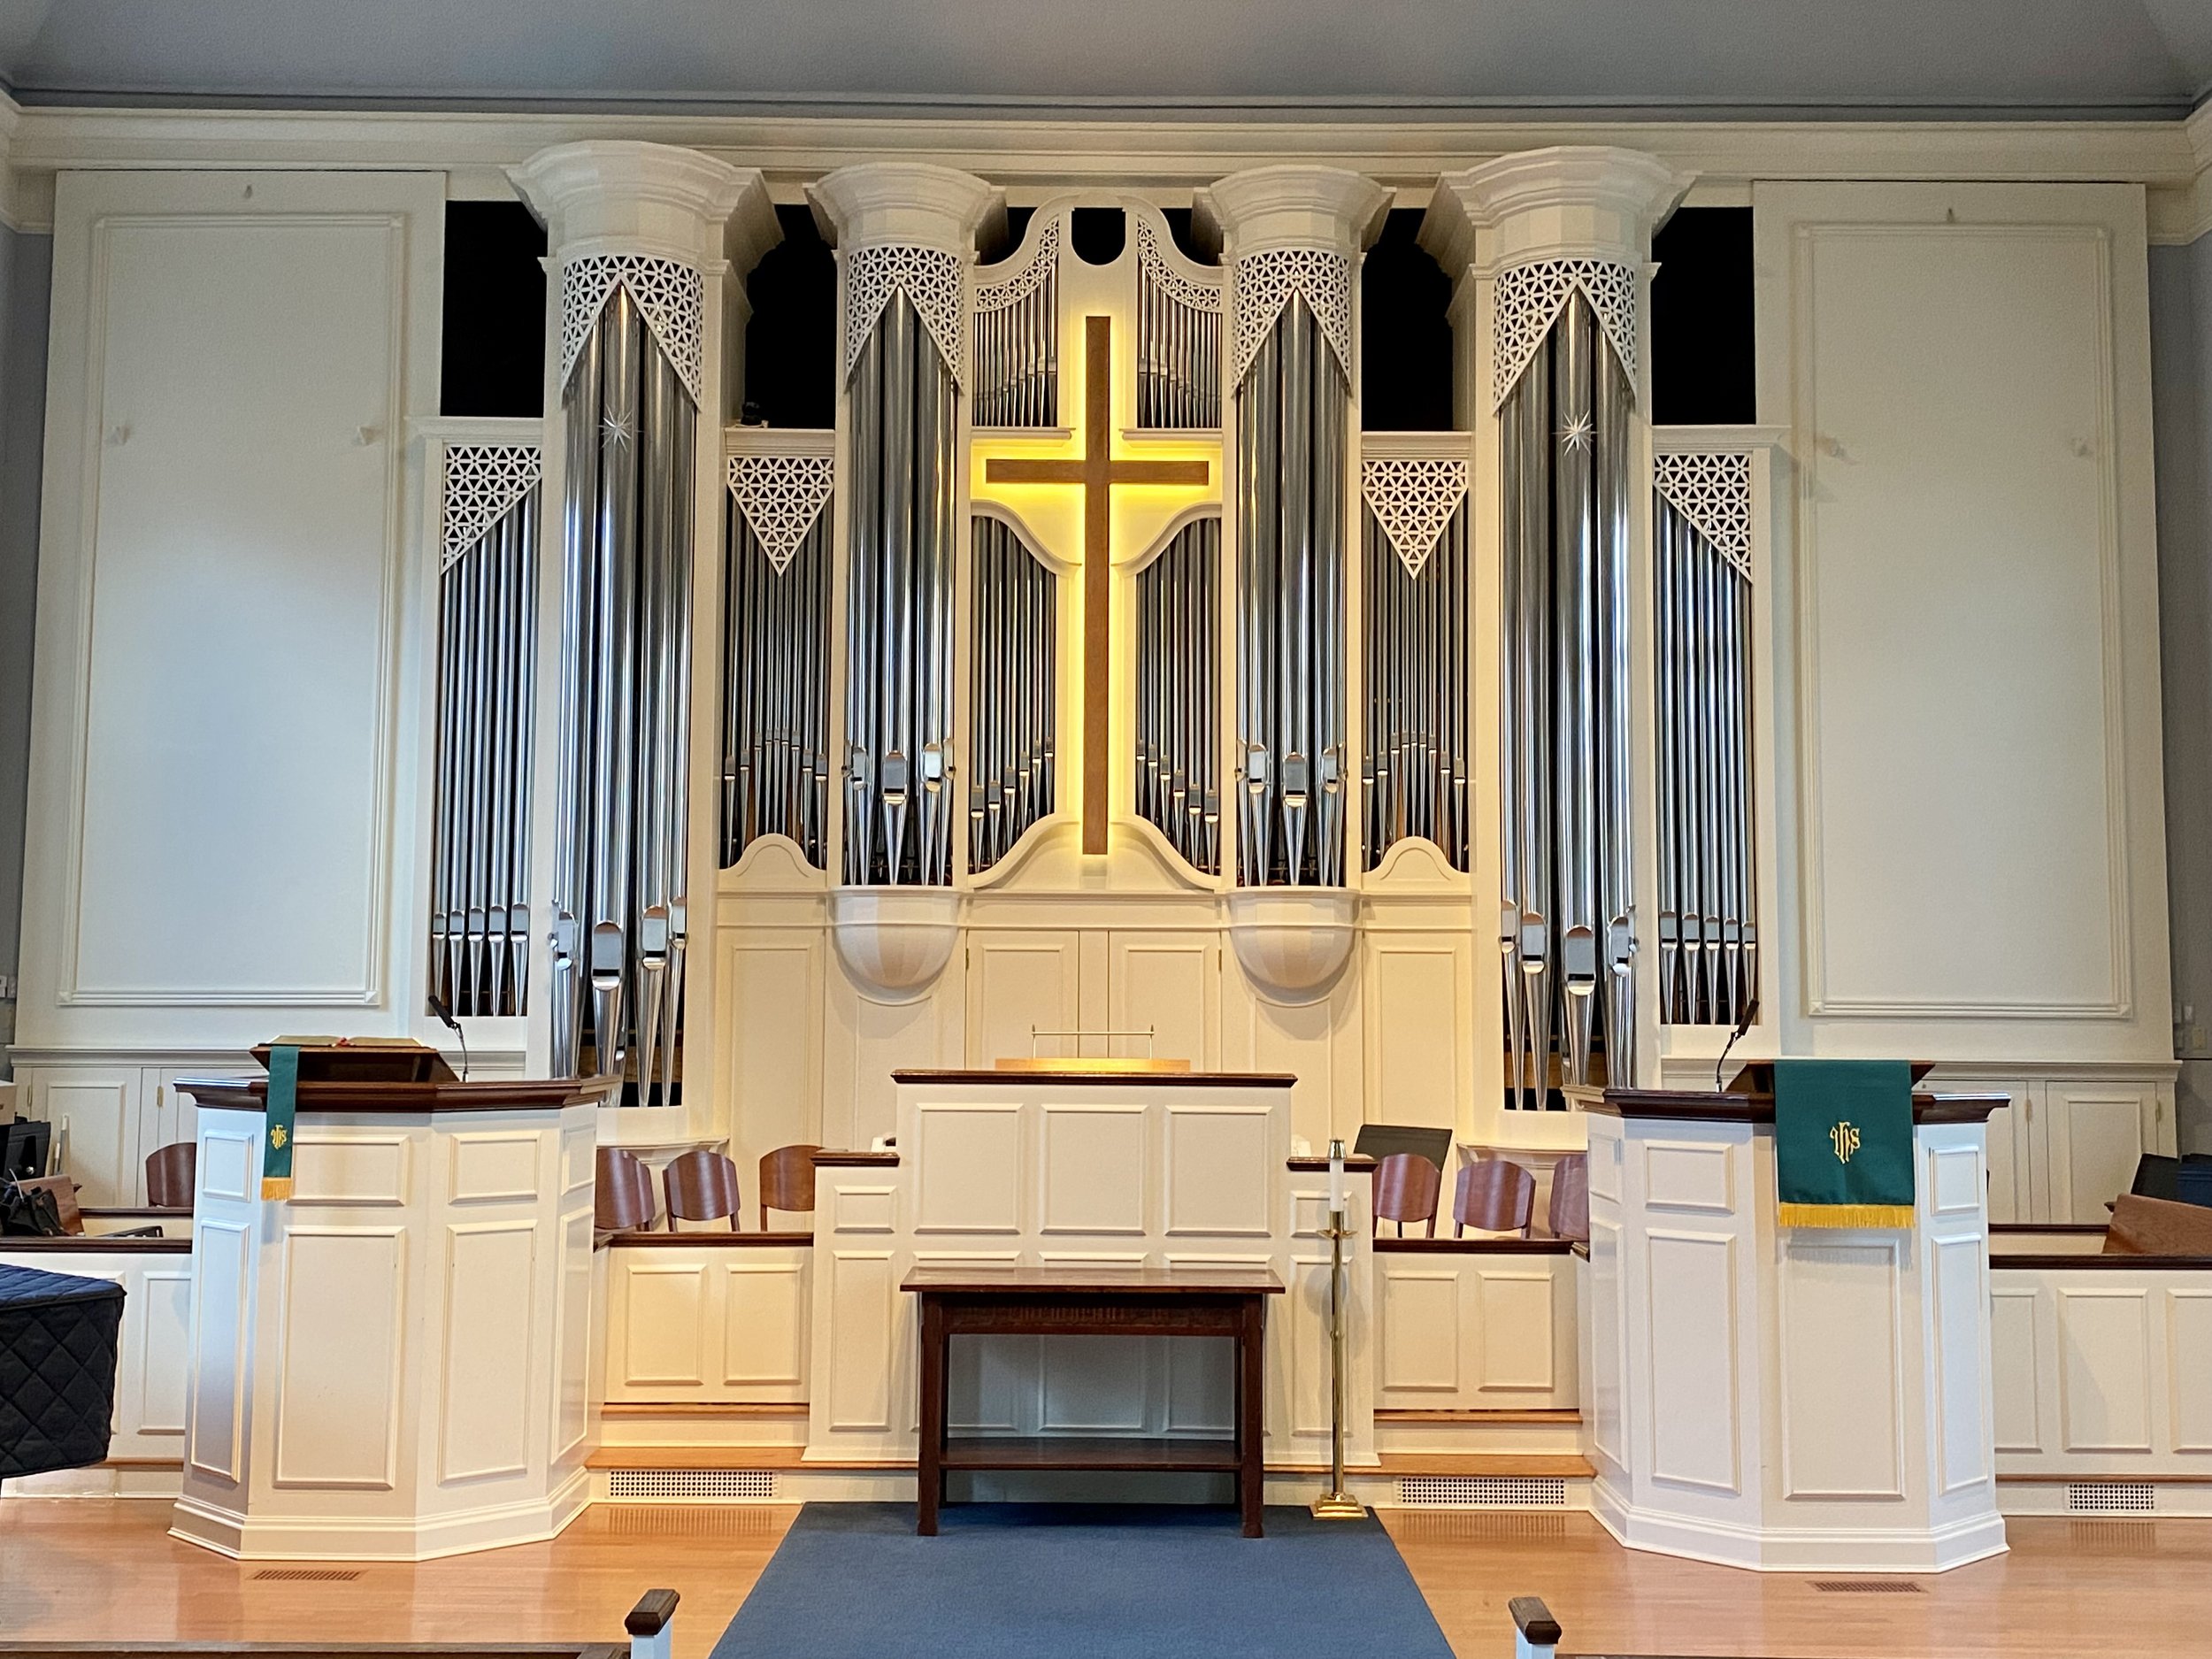 Presbyterian Church of Mt. Kisco in New York